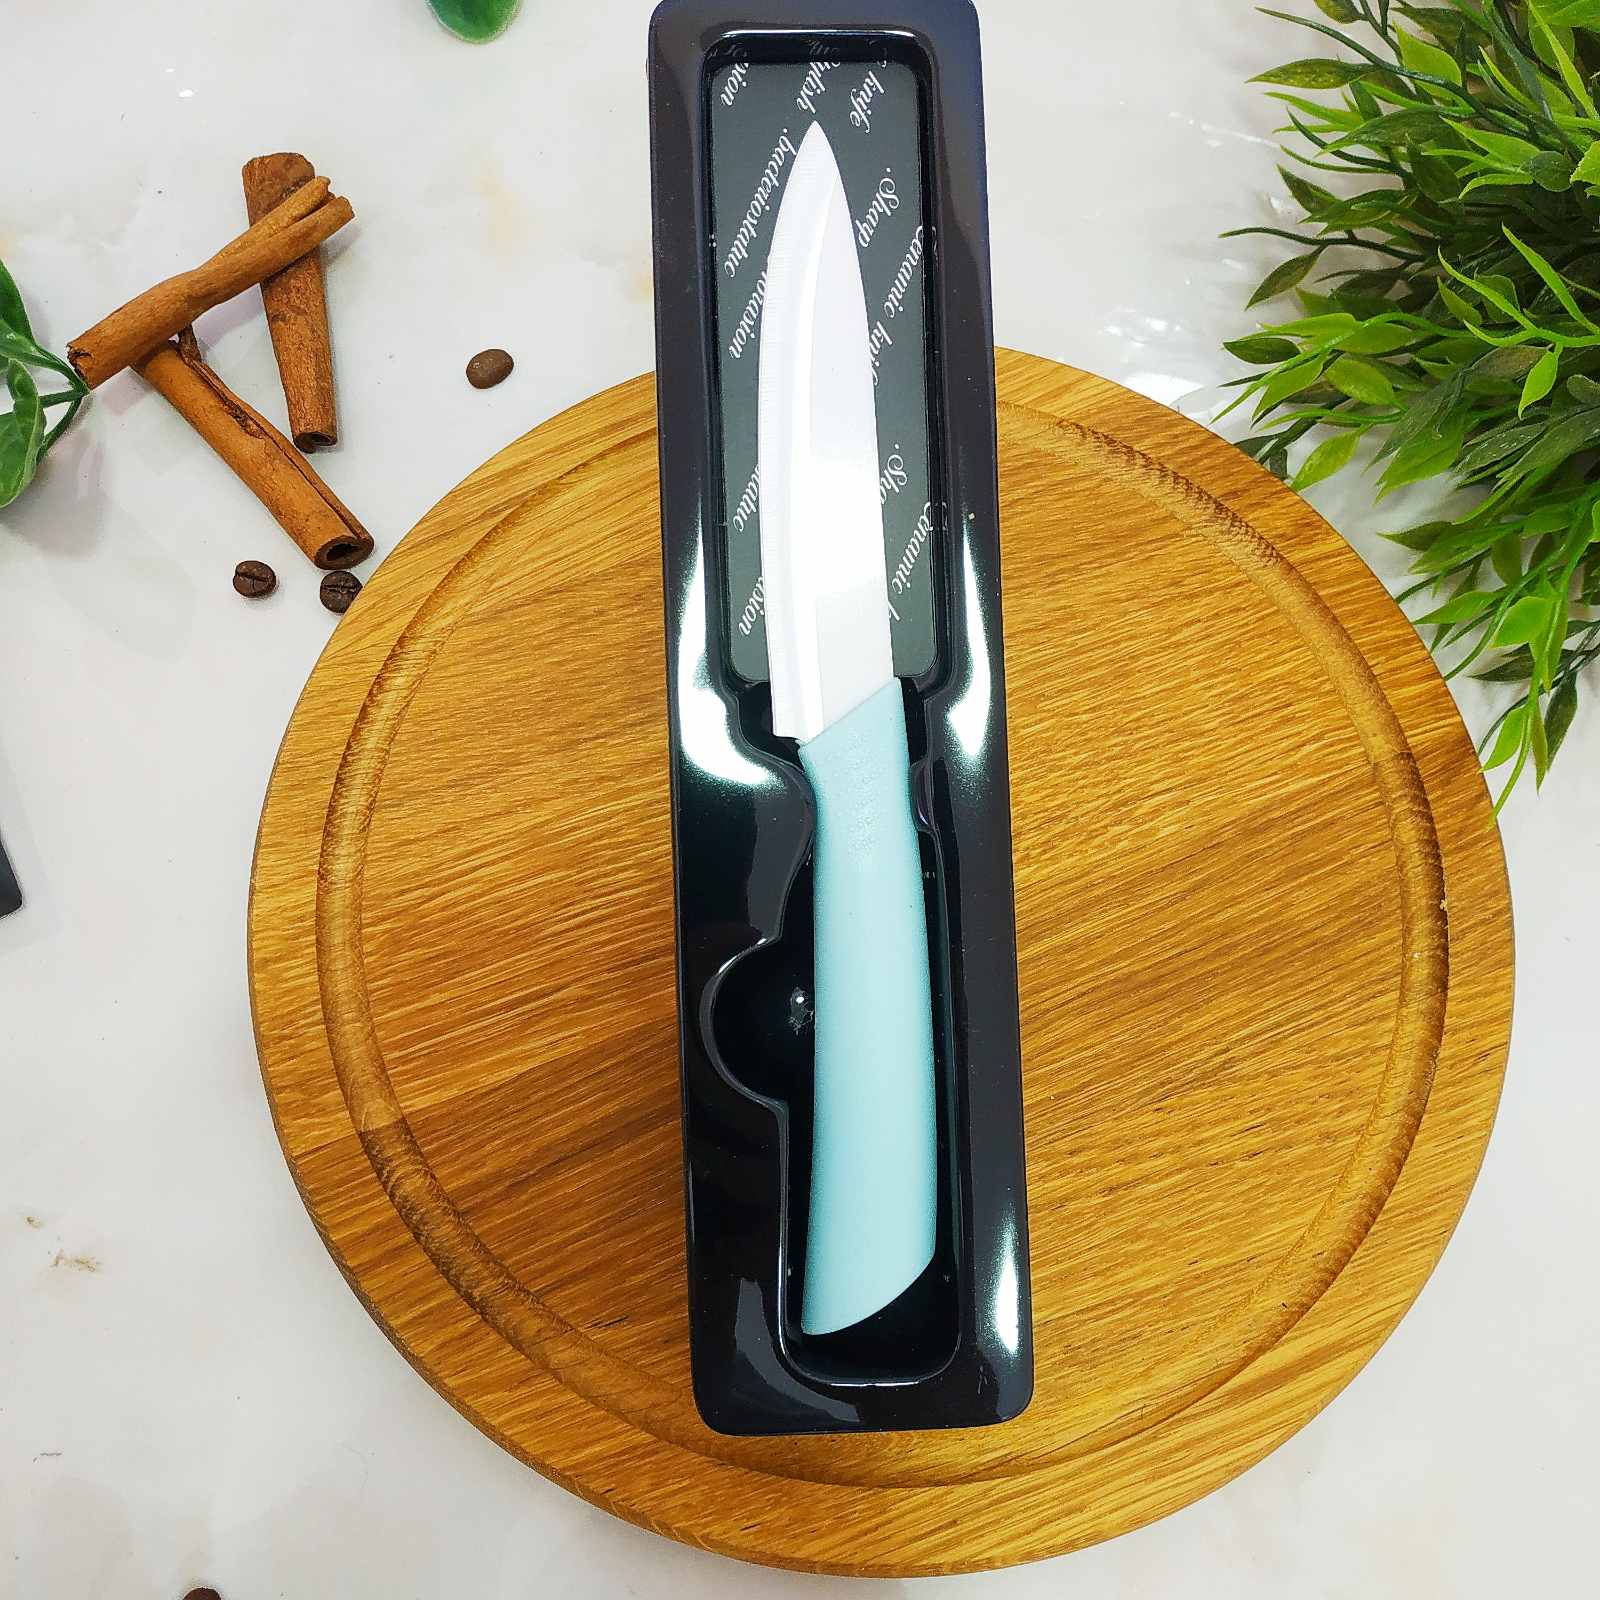 Нож керамика 20 см 1823 ✅ базовая цена 104.90 грн. ✔ Опт ✔ Скидки ✔ Заходите! - Интернет-магазин ✅ Фортуна-опт ✅